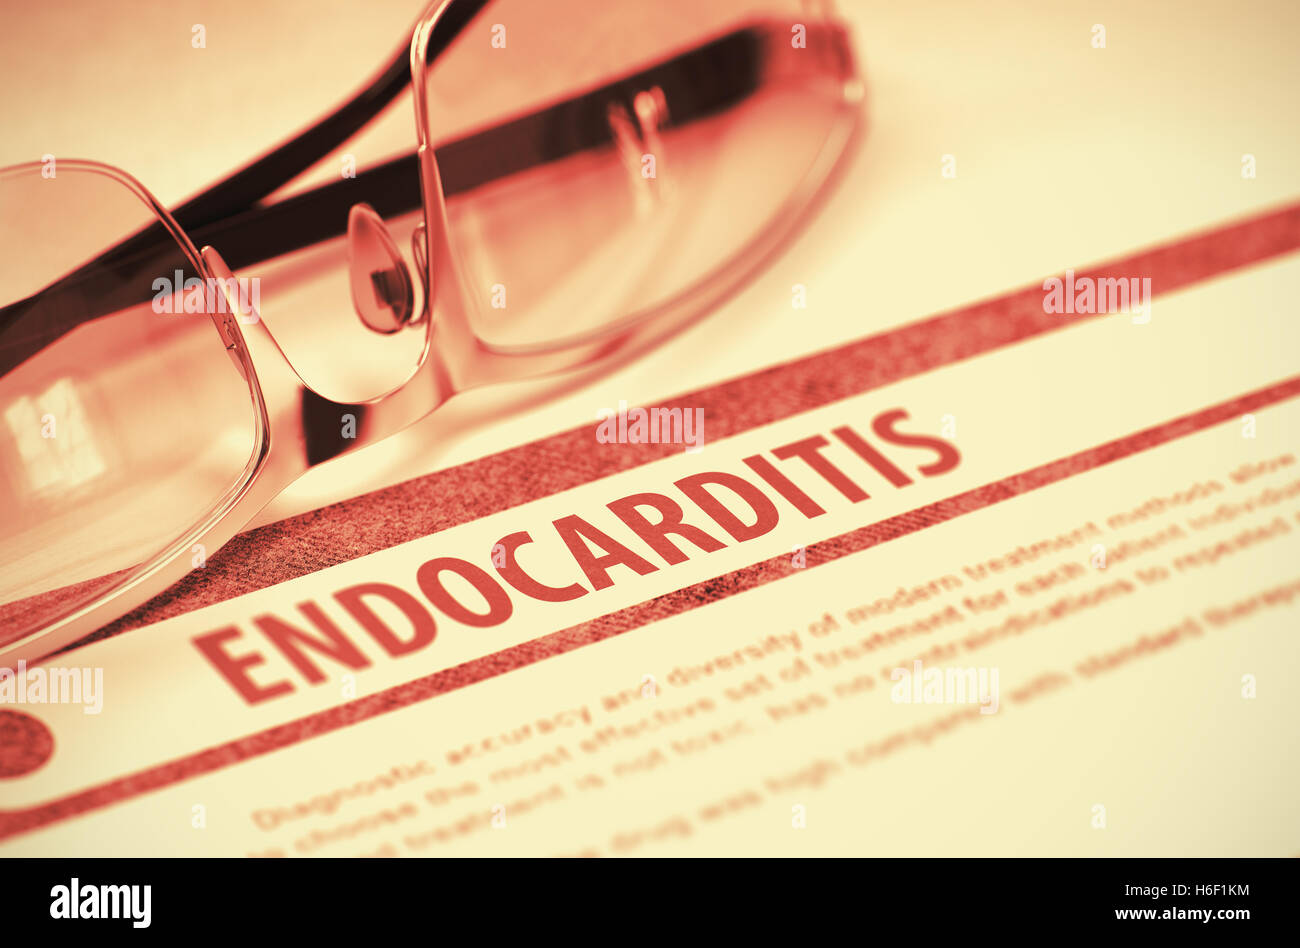 Diagnosis - Endocarditis. Medical Concept. 3D Illustration. Stock Photo